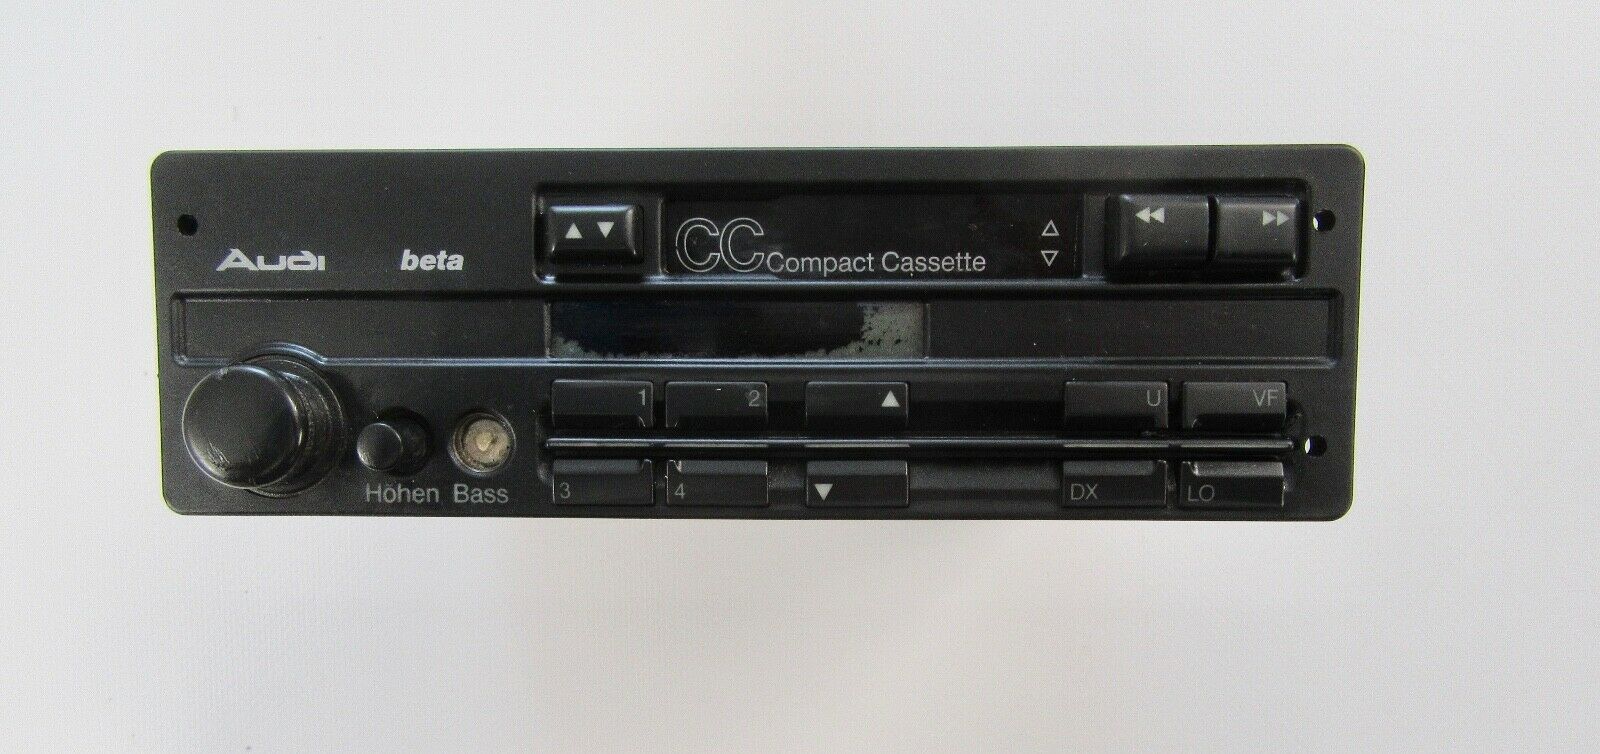 https://omecar.de/wp-content/uploads/imported/7/Audi-Beta-Radio-CC-Compact-Cassette-Kassettenradio-Autoradio-325127531247.jpg